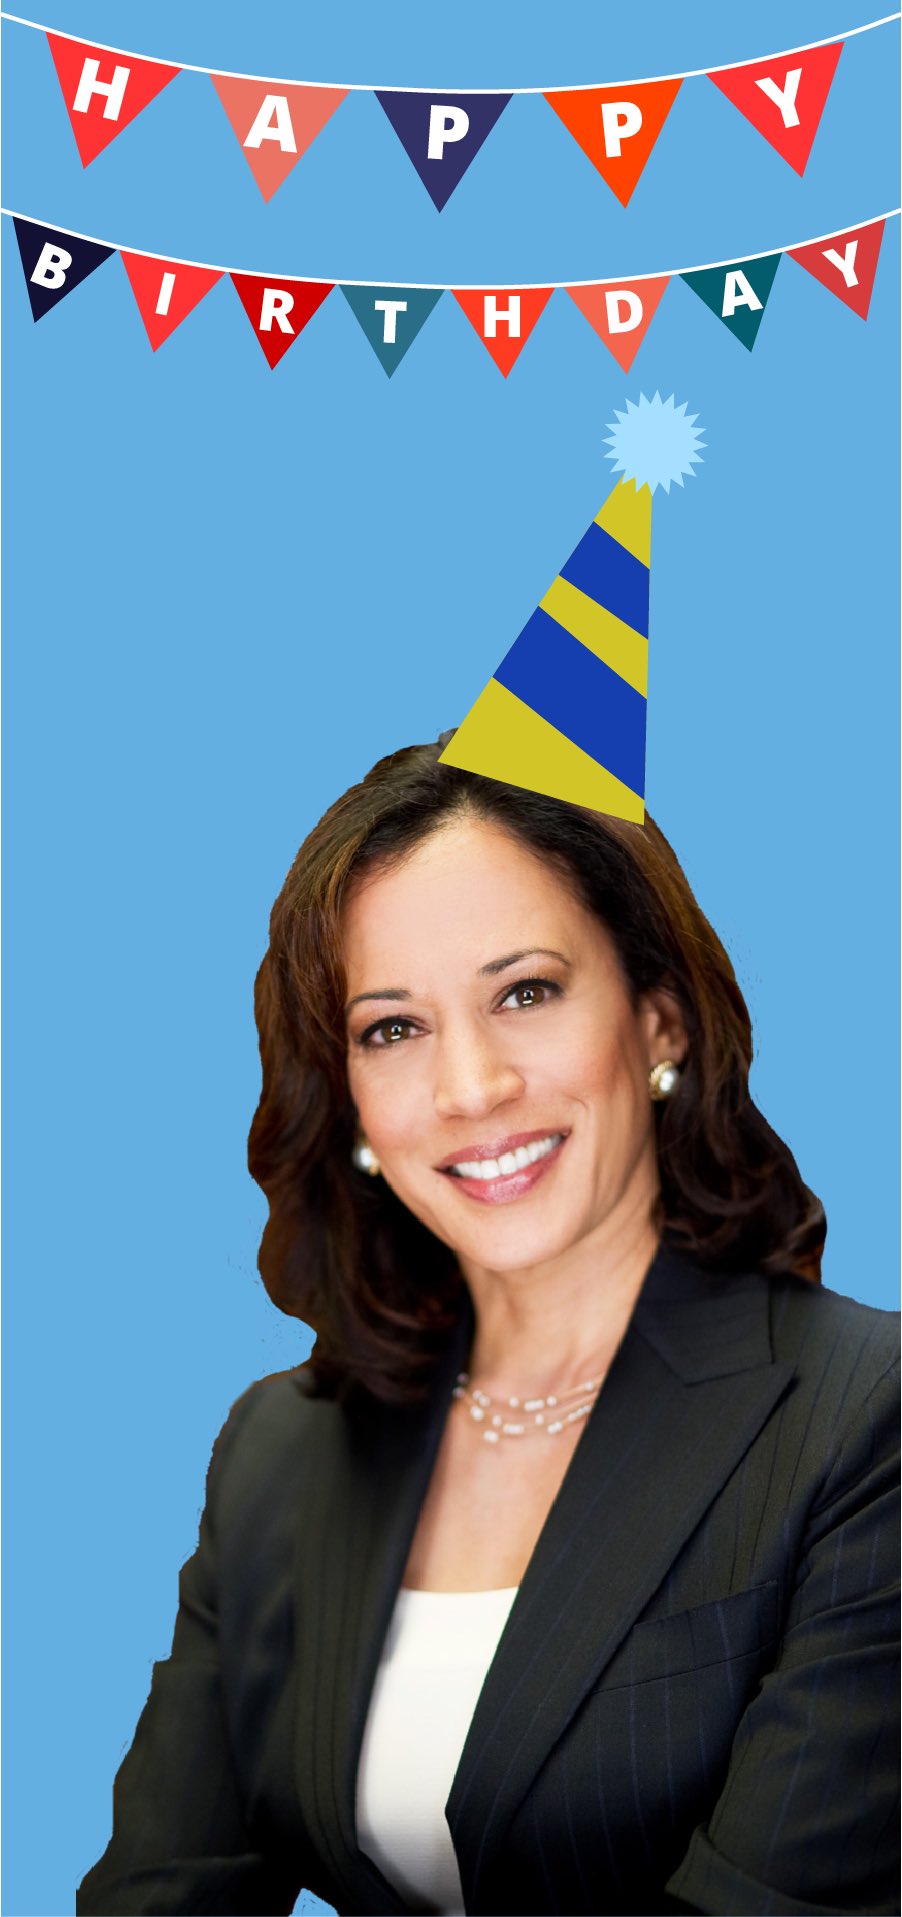 Wishing a happy birthday to the wonderful senator from California, Kamala Harris   